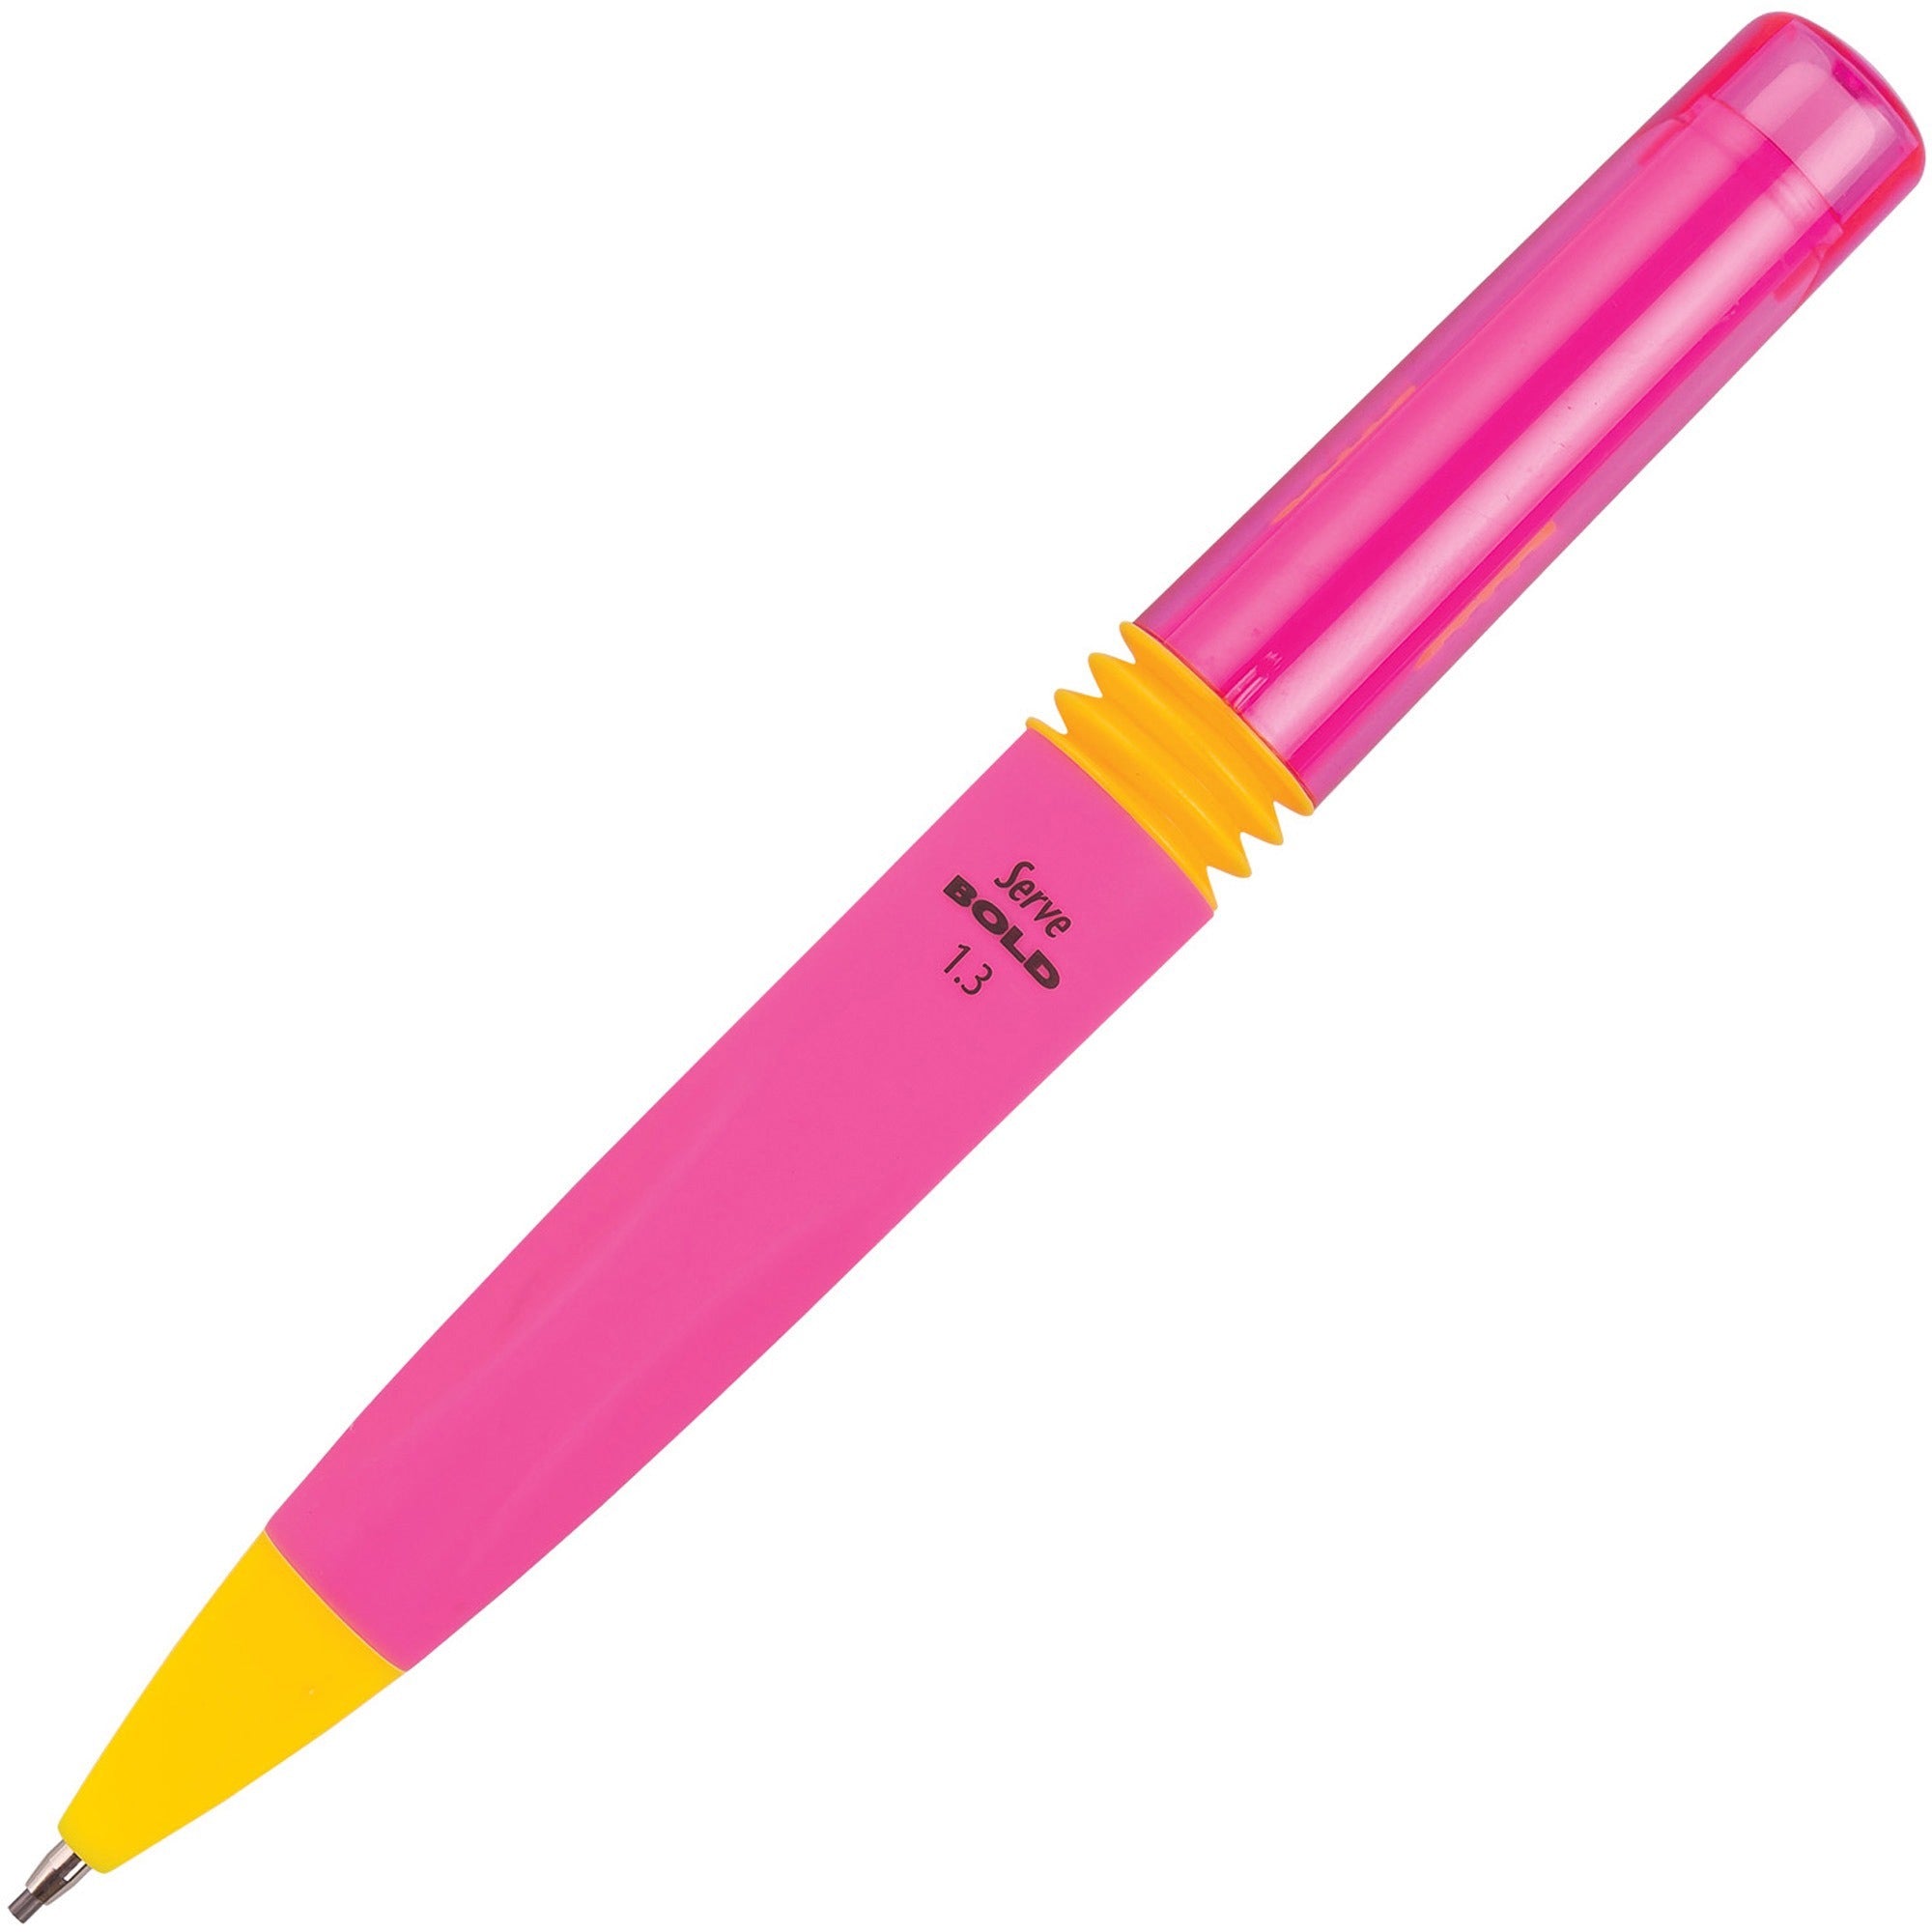 serve-bold-mechanical-pencil-13-mm-lead-diameter-bold-point-black-lead-pink-plastic-barrel-1-each_srvbd13k12p - 1